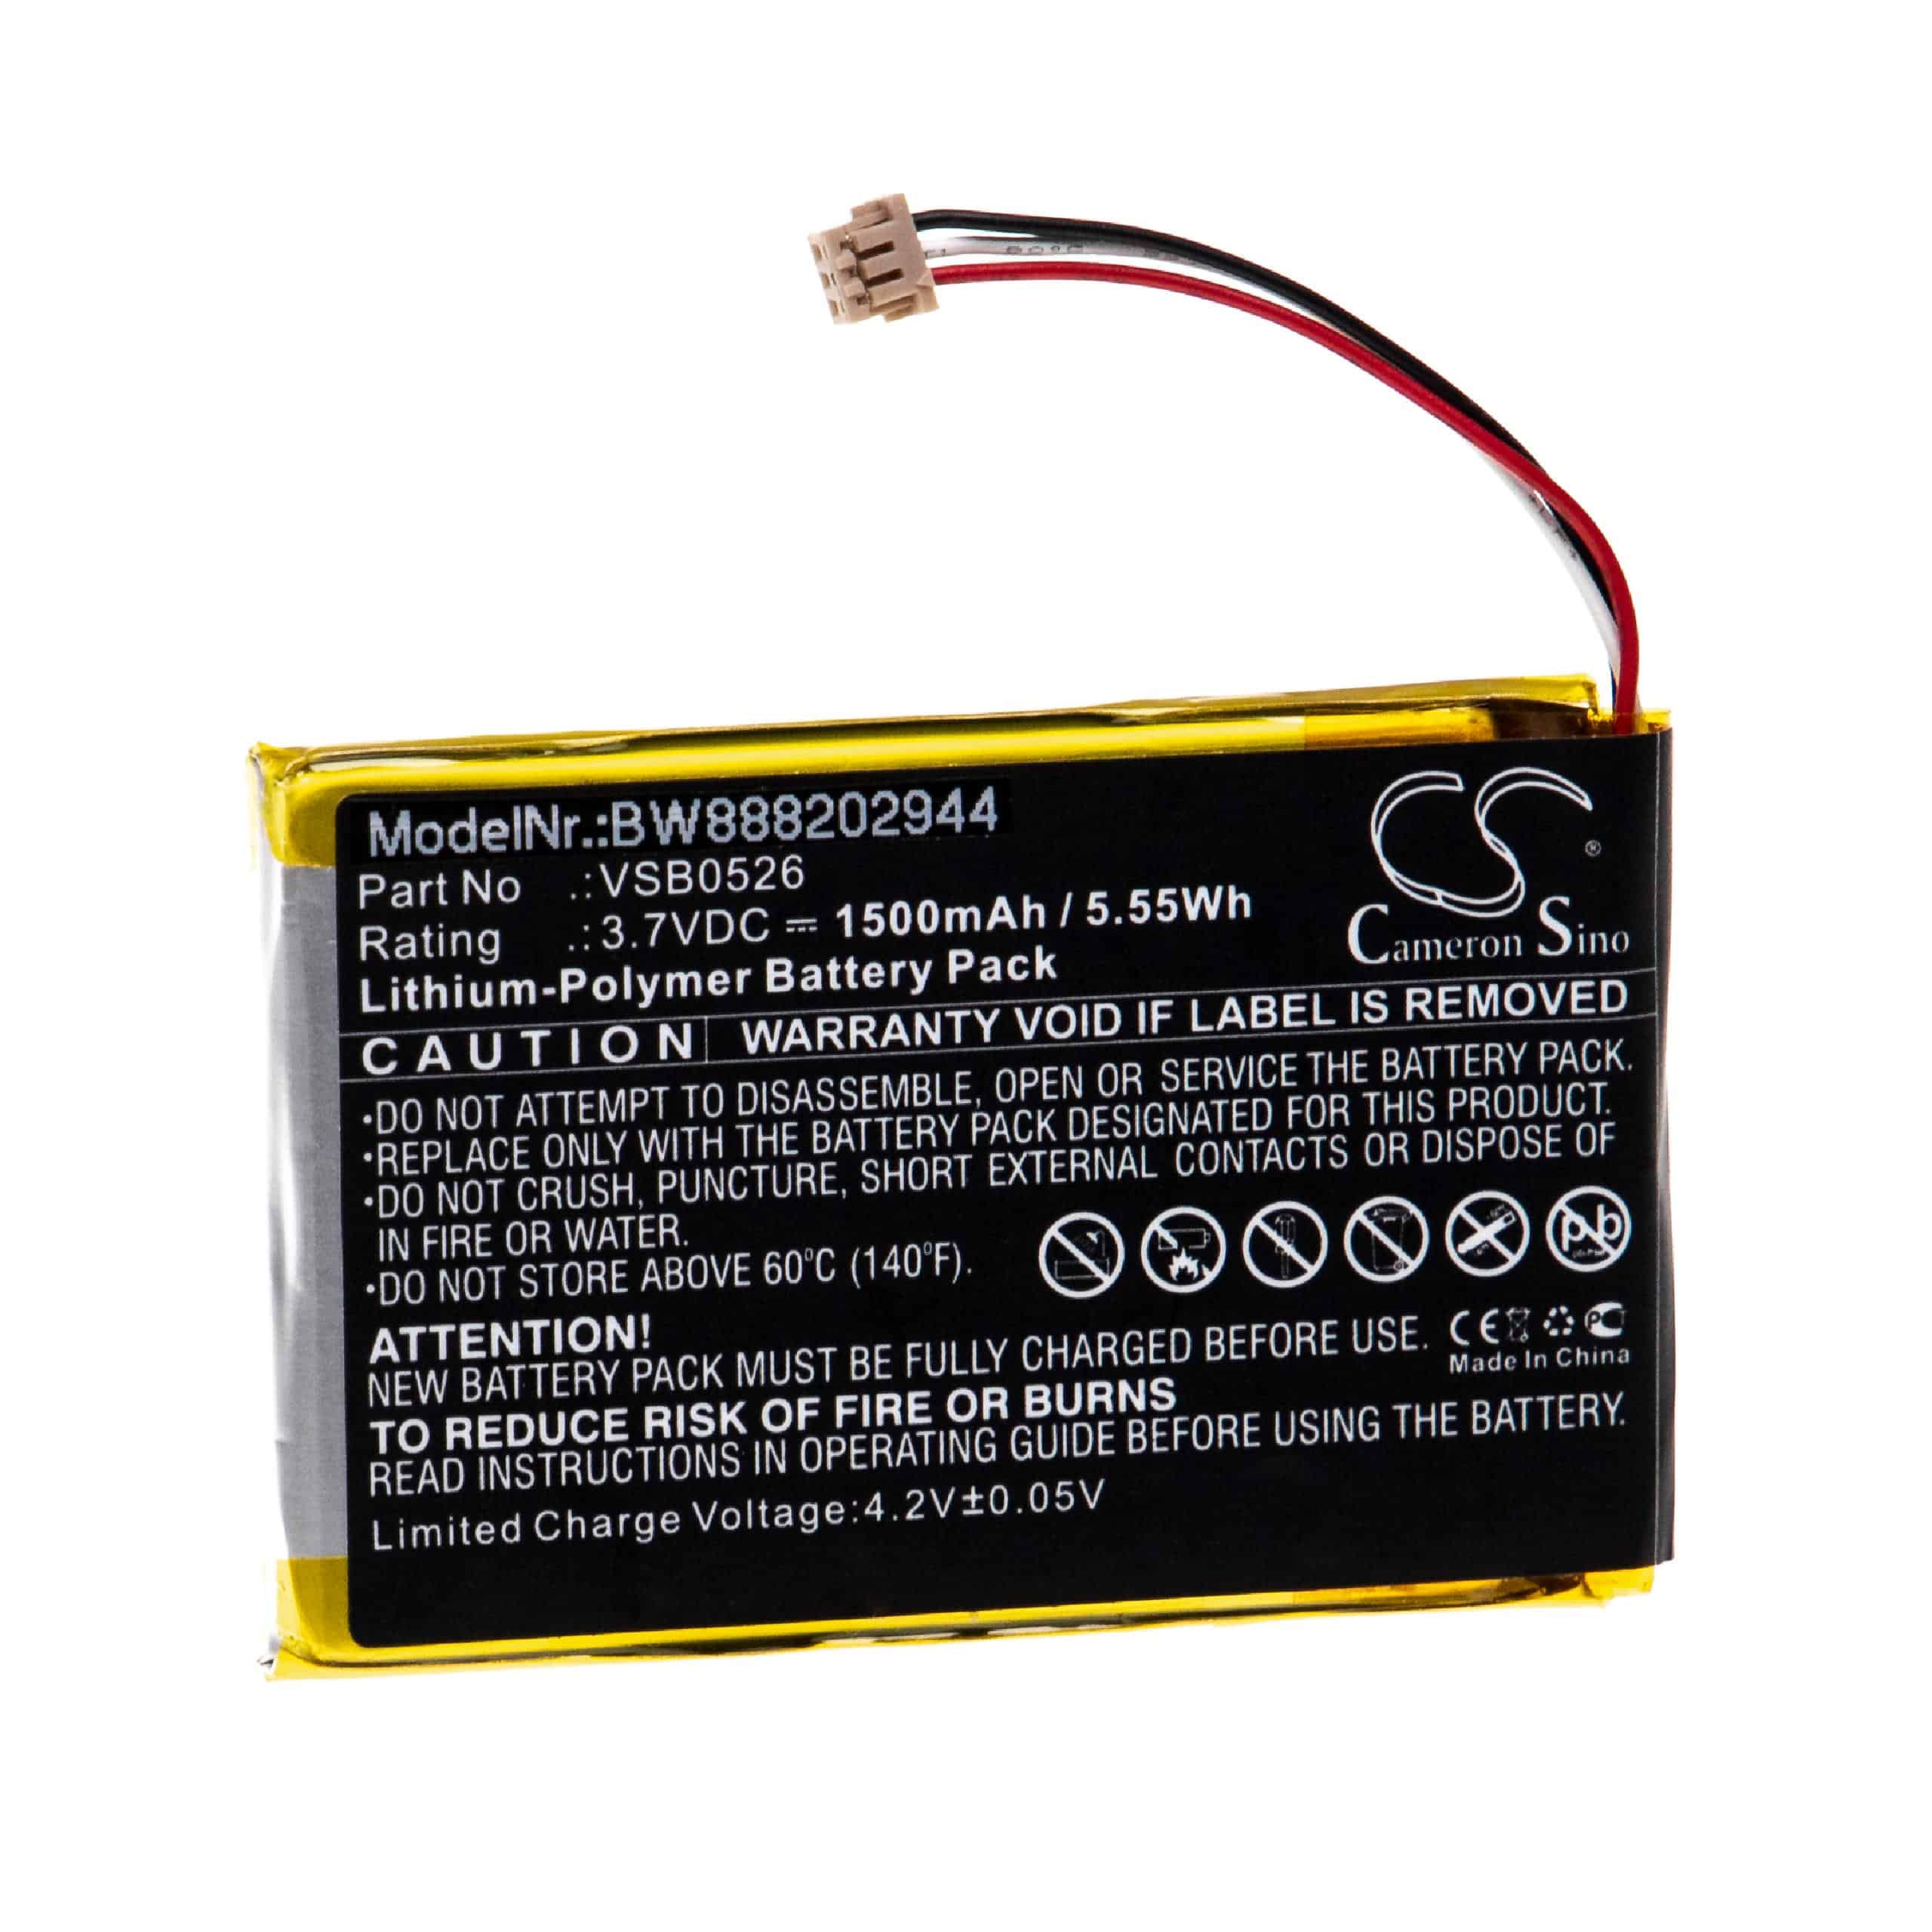 Battery Replacement for Panasonic VSB0526 - 1500mAh, 3.7V, Li-polymer